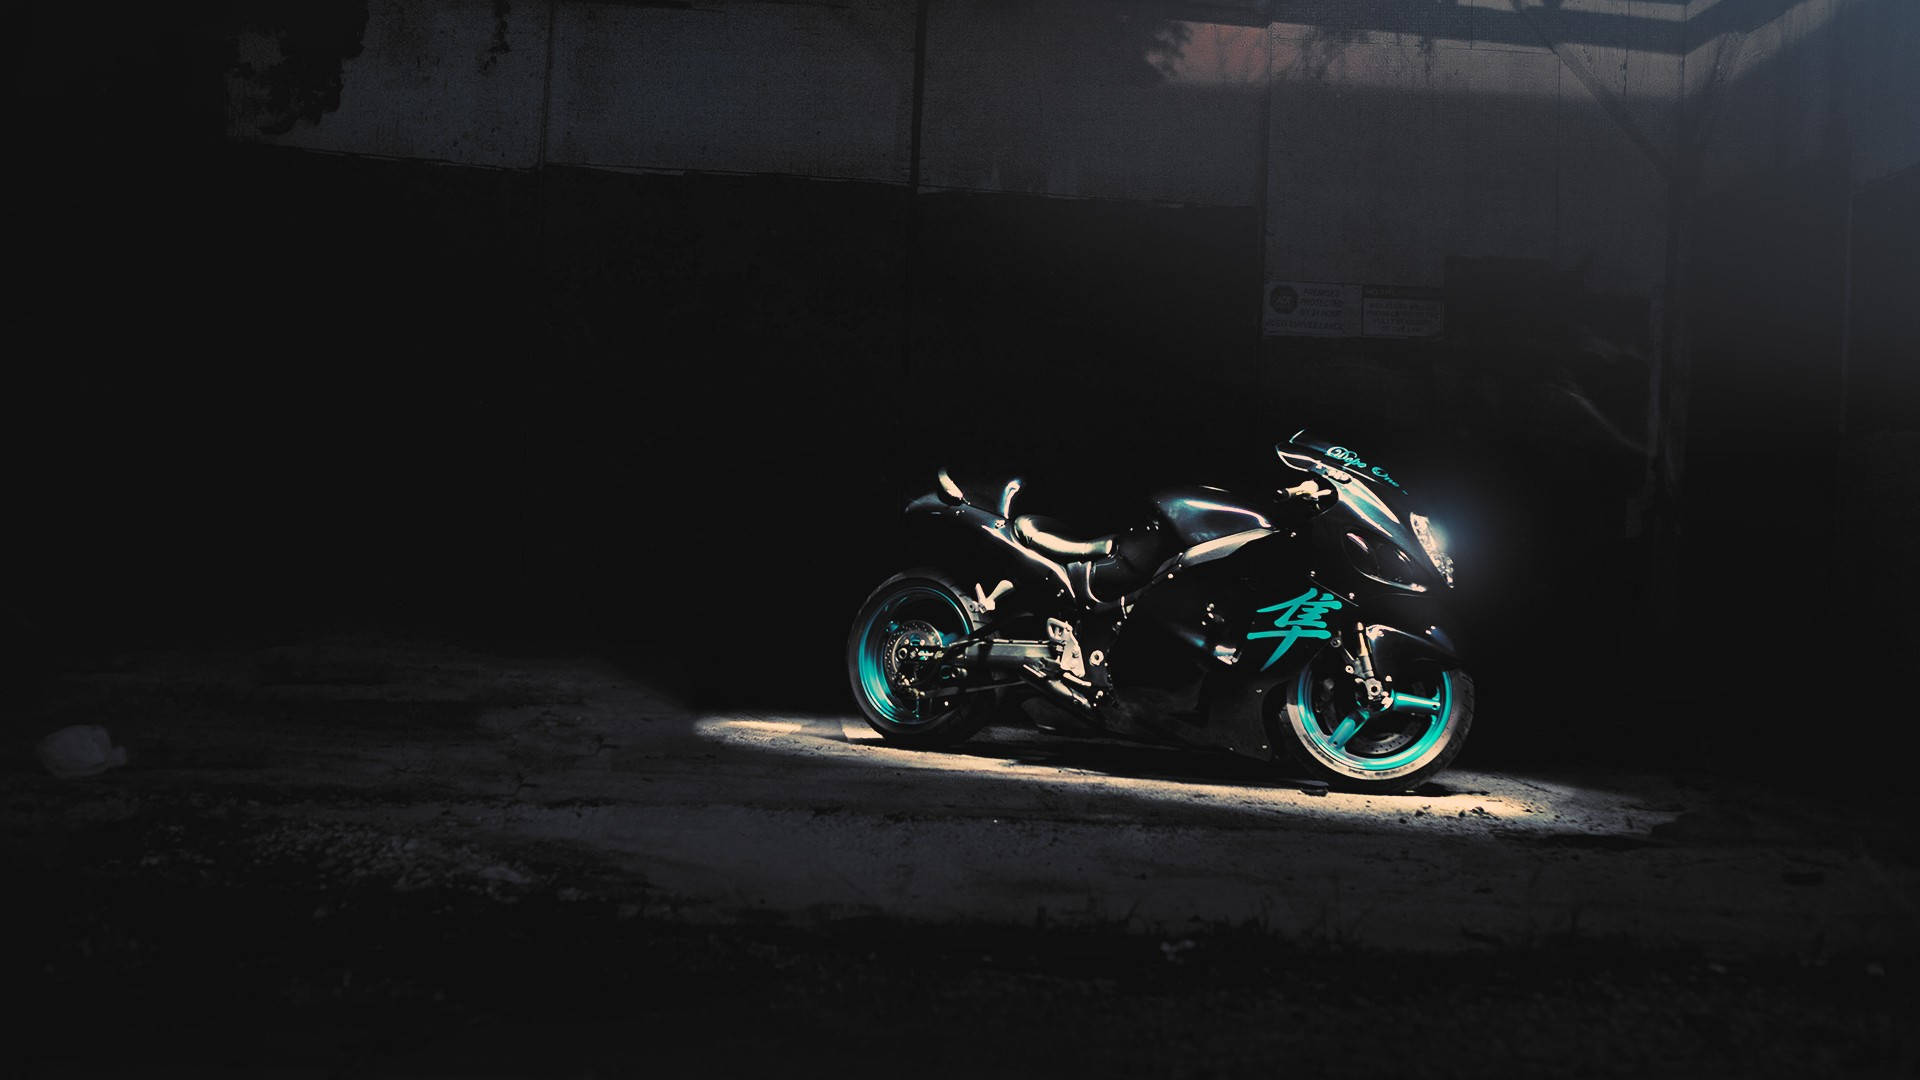 Download wallpaper 800x1200 man bike dark silhouette darkness iphone  4s4 for parallax hd background